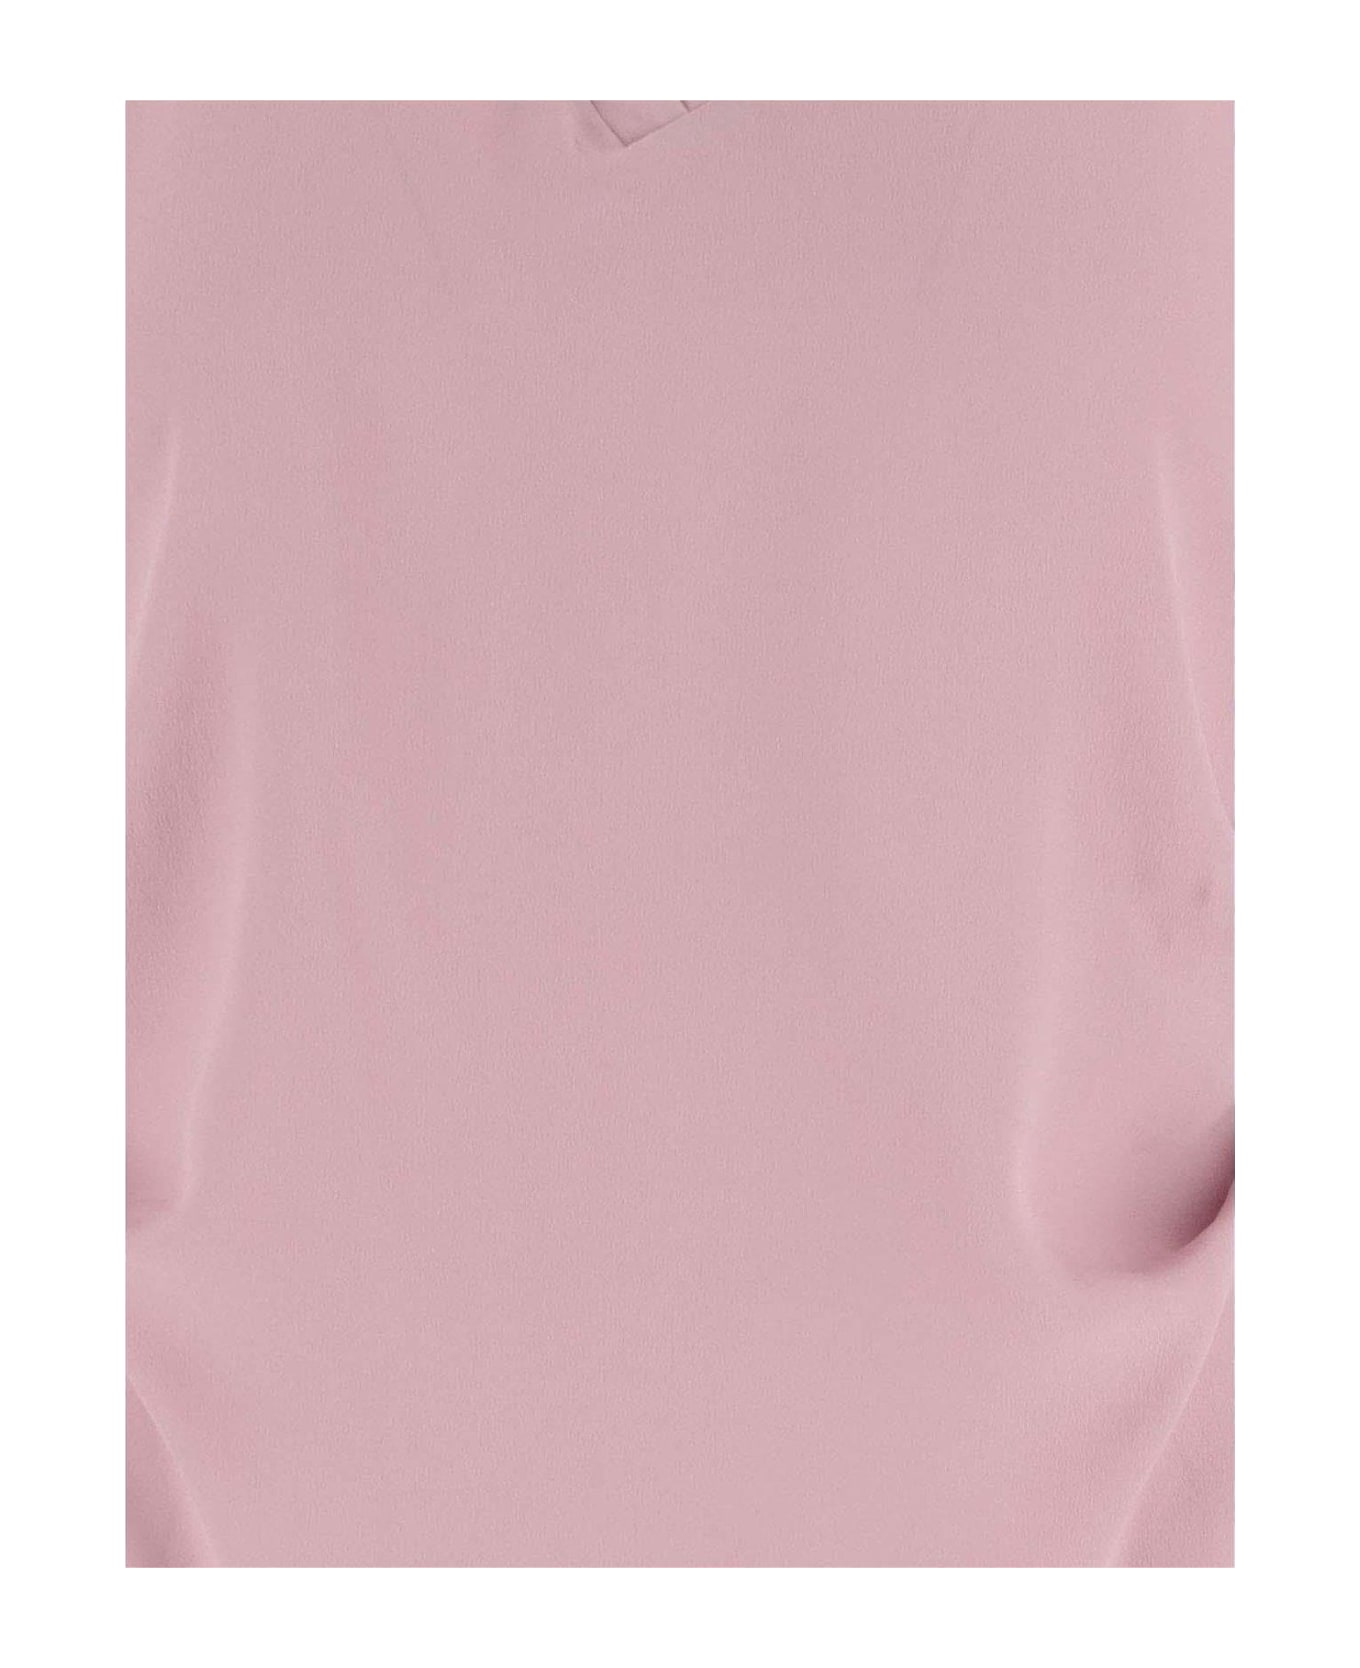 Pinko V-neck Curved Hem T-shirt - Pink